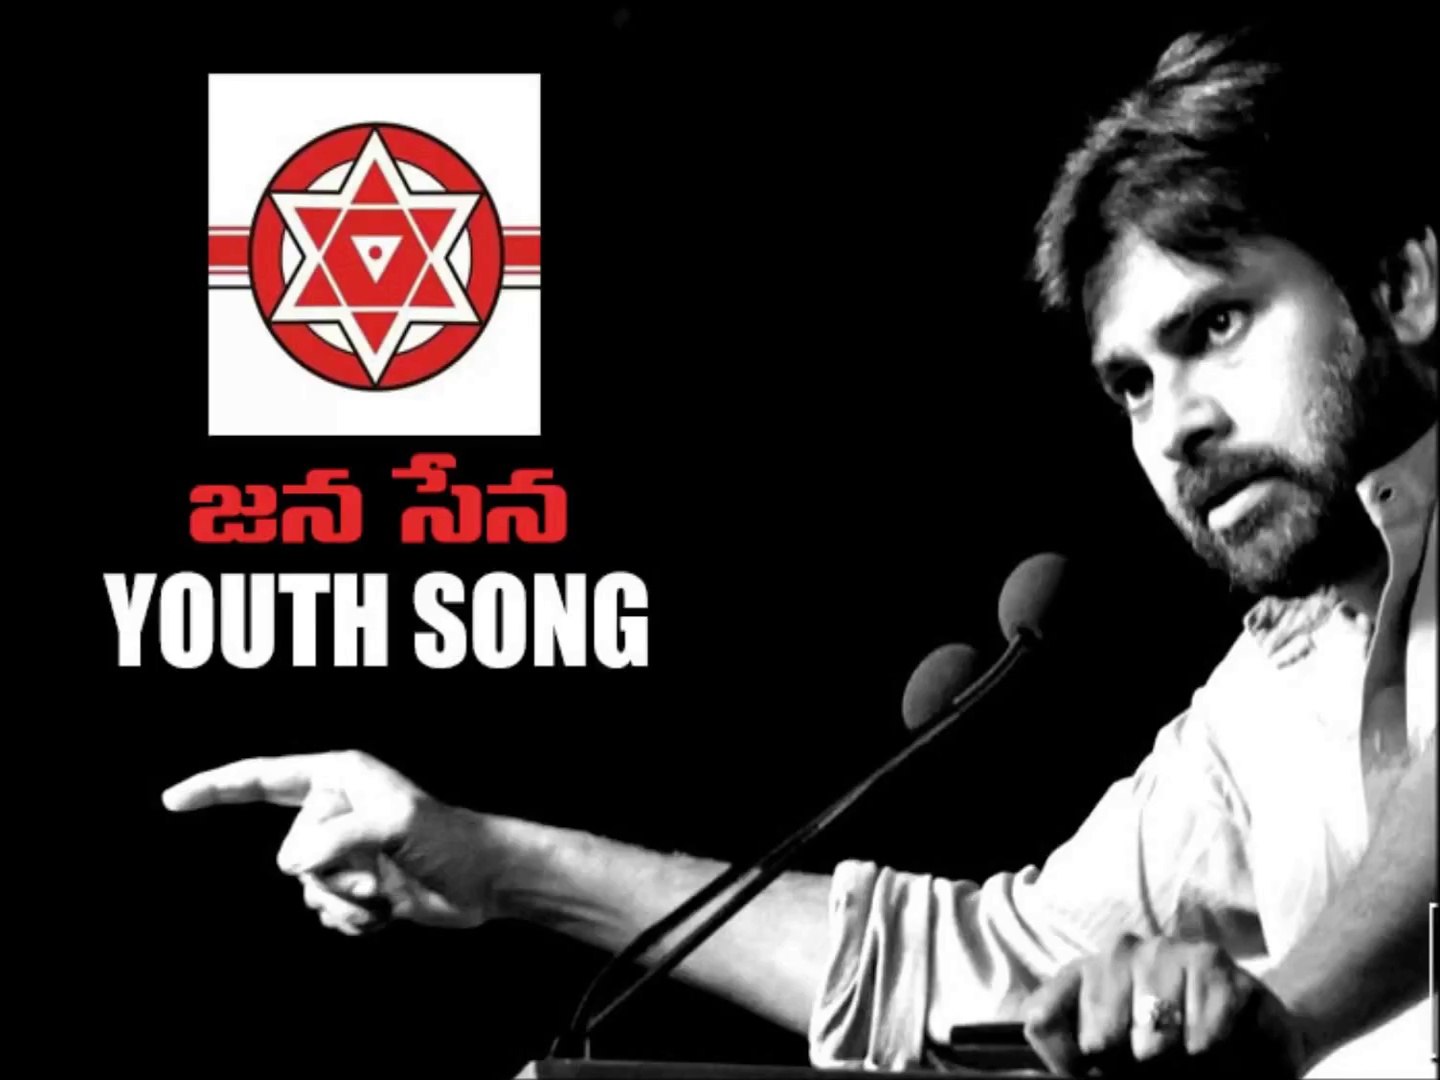 Pawan Kalyan Jana Sena Youth song - Movies Media - video Dailymotion